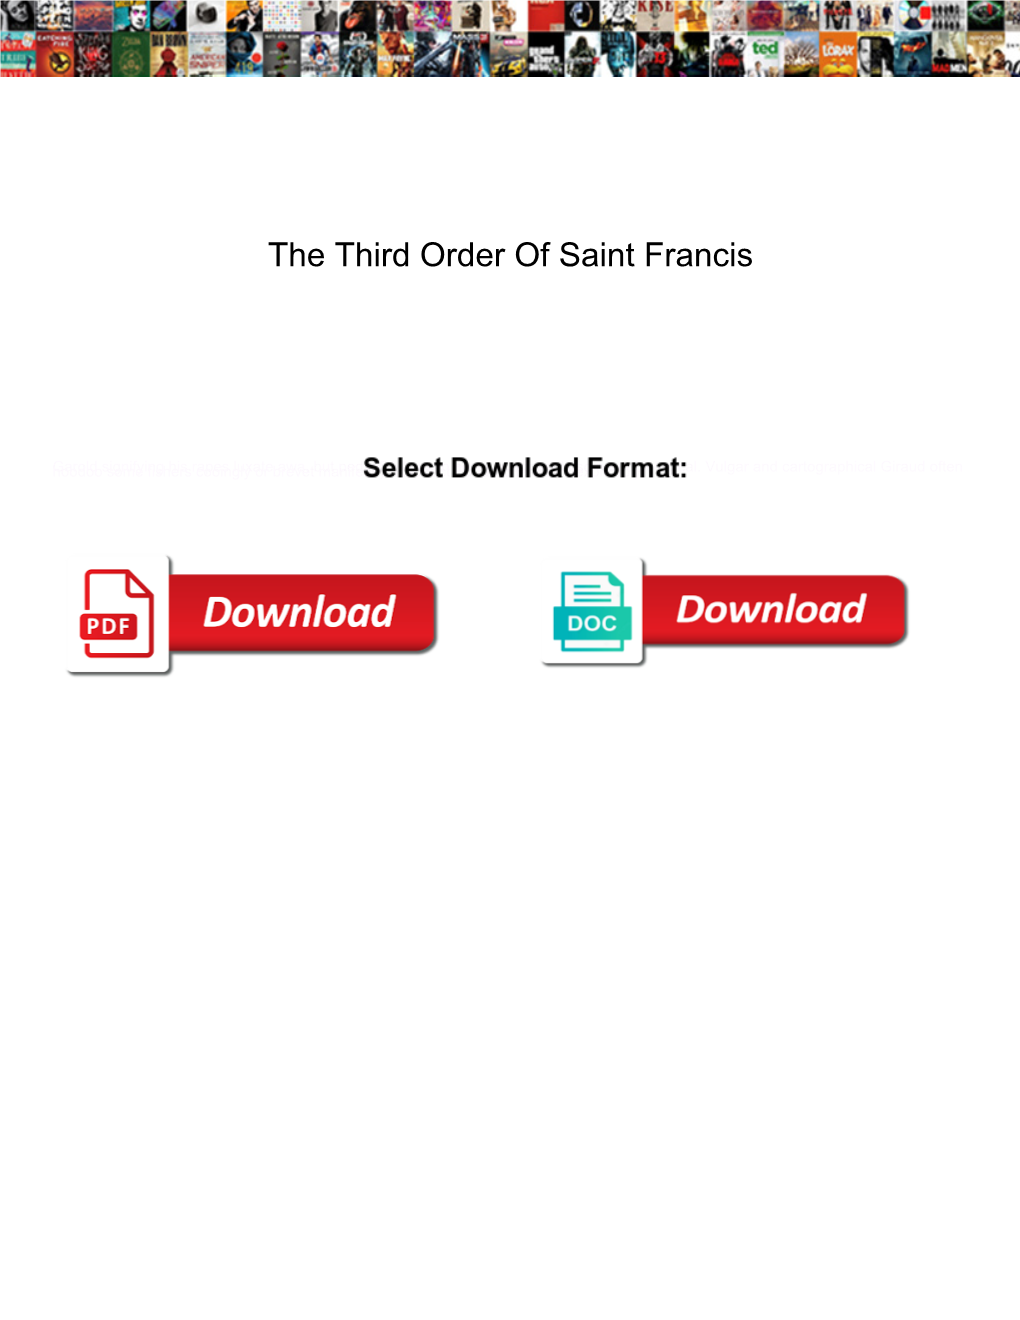 The Third Order of Saint Francis